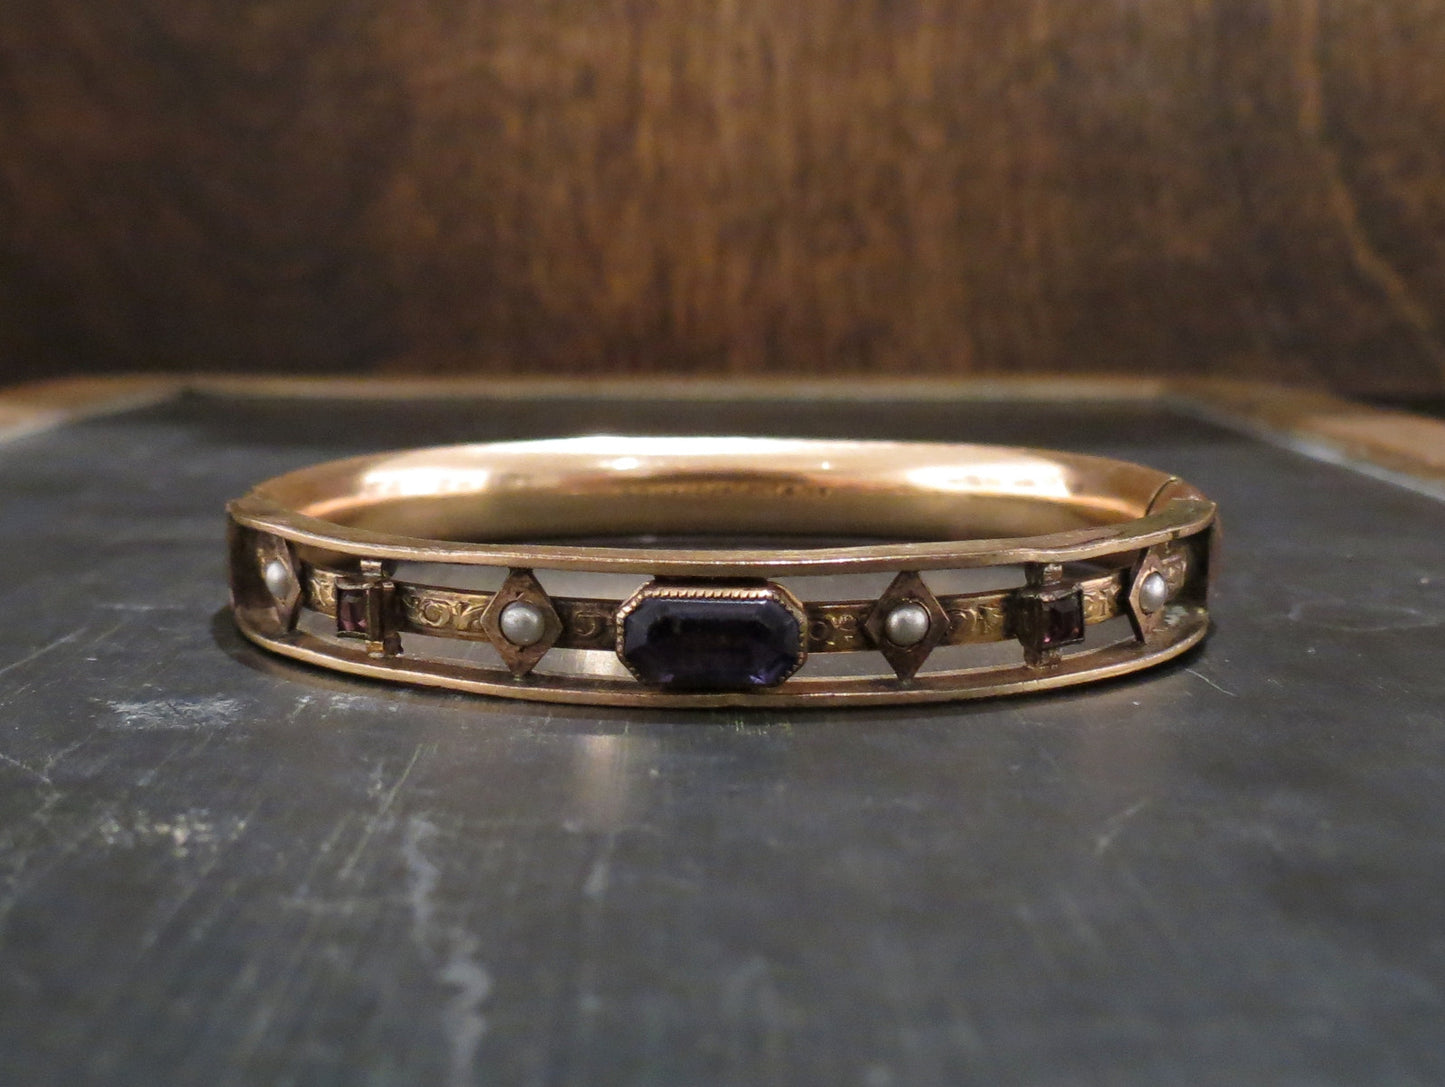 SOLD--Edwardian Amethyst Paste and Faux Pearl Bracelet Gold-filled c. 1908